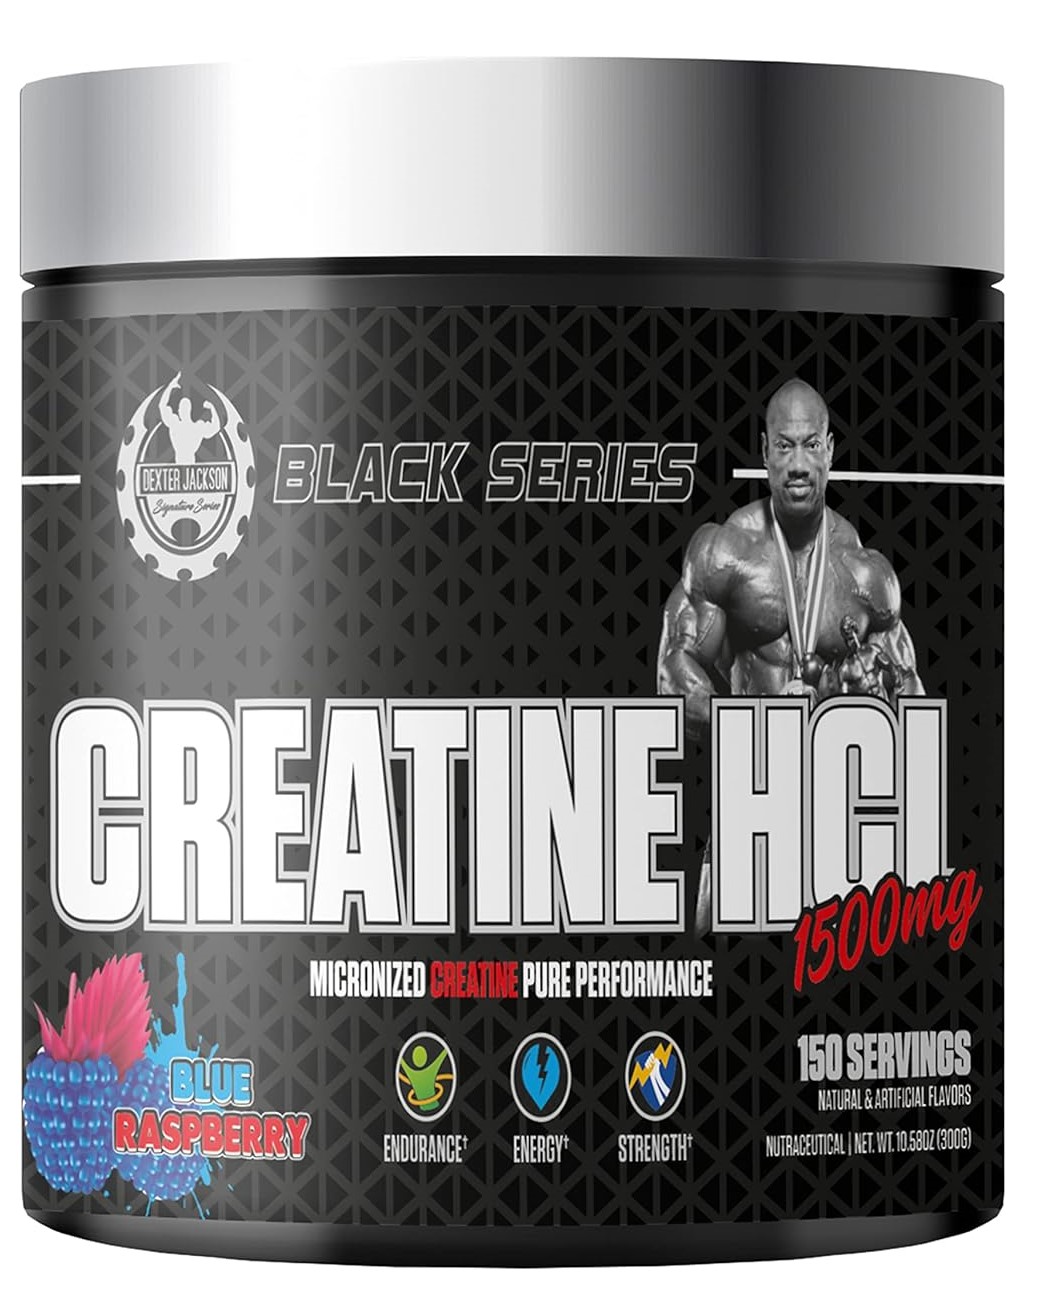 Dexter Jackson Black Series Creatine HCL 2000 mg -150 Servings